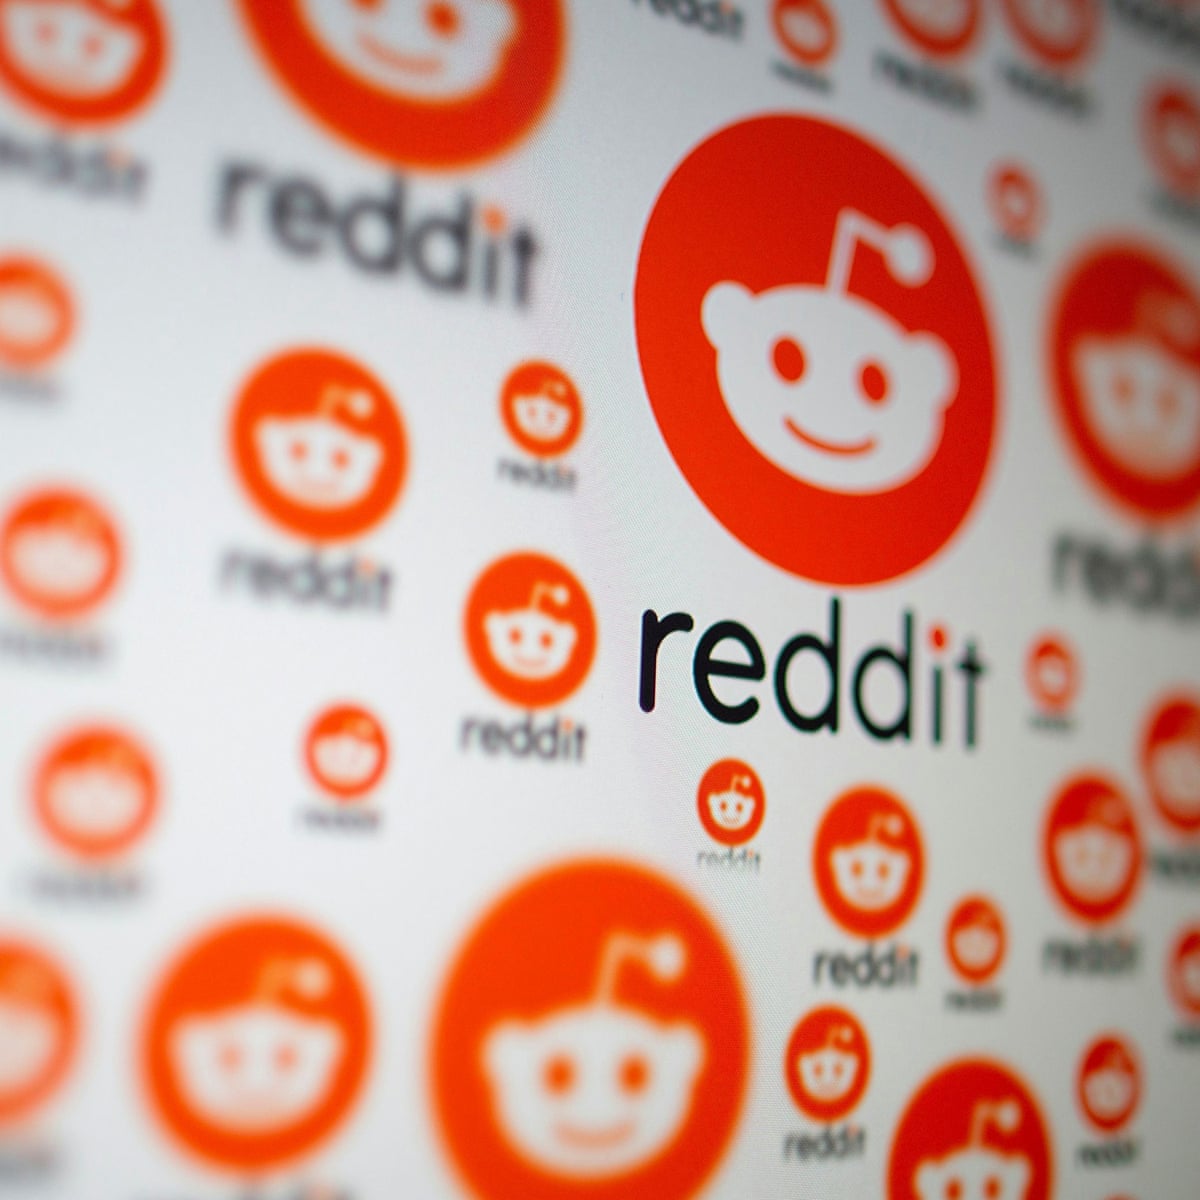 Reddit Defends How It Tackles Misinformation As It Opens Australian Office Reddit The Guardian